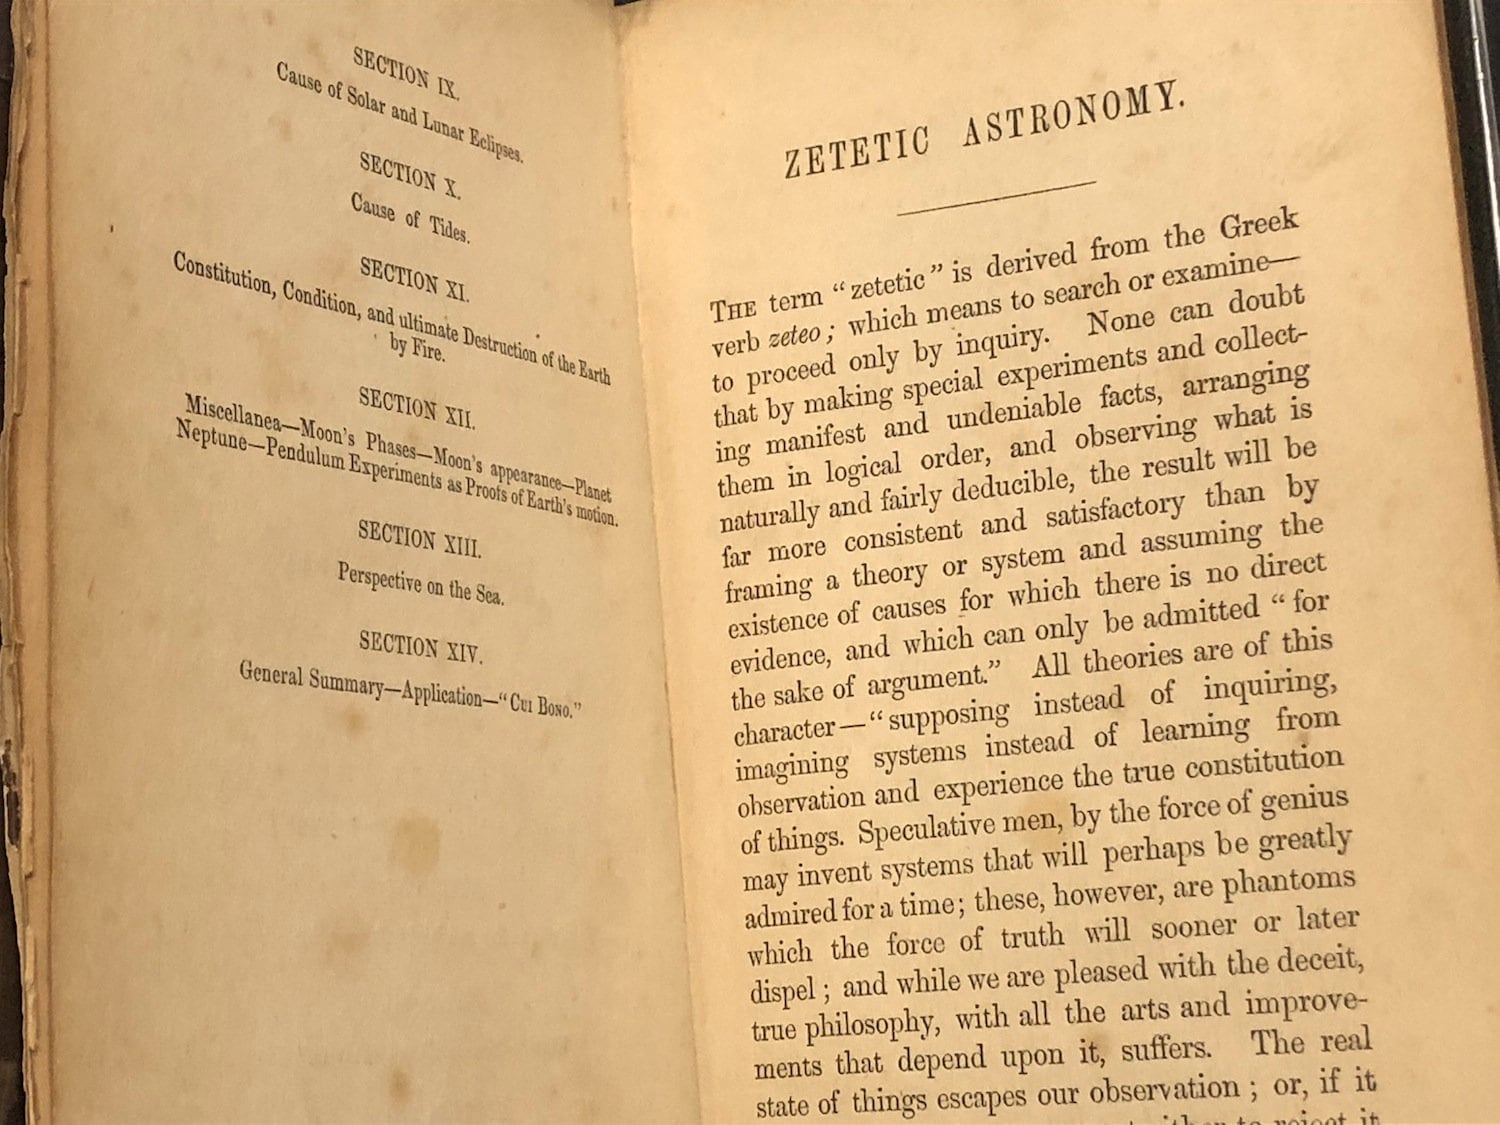 zetetic astronomy first published